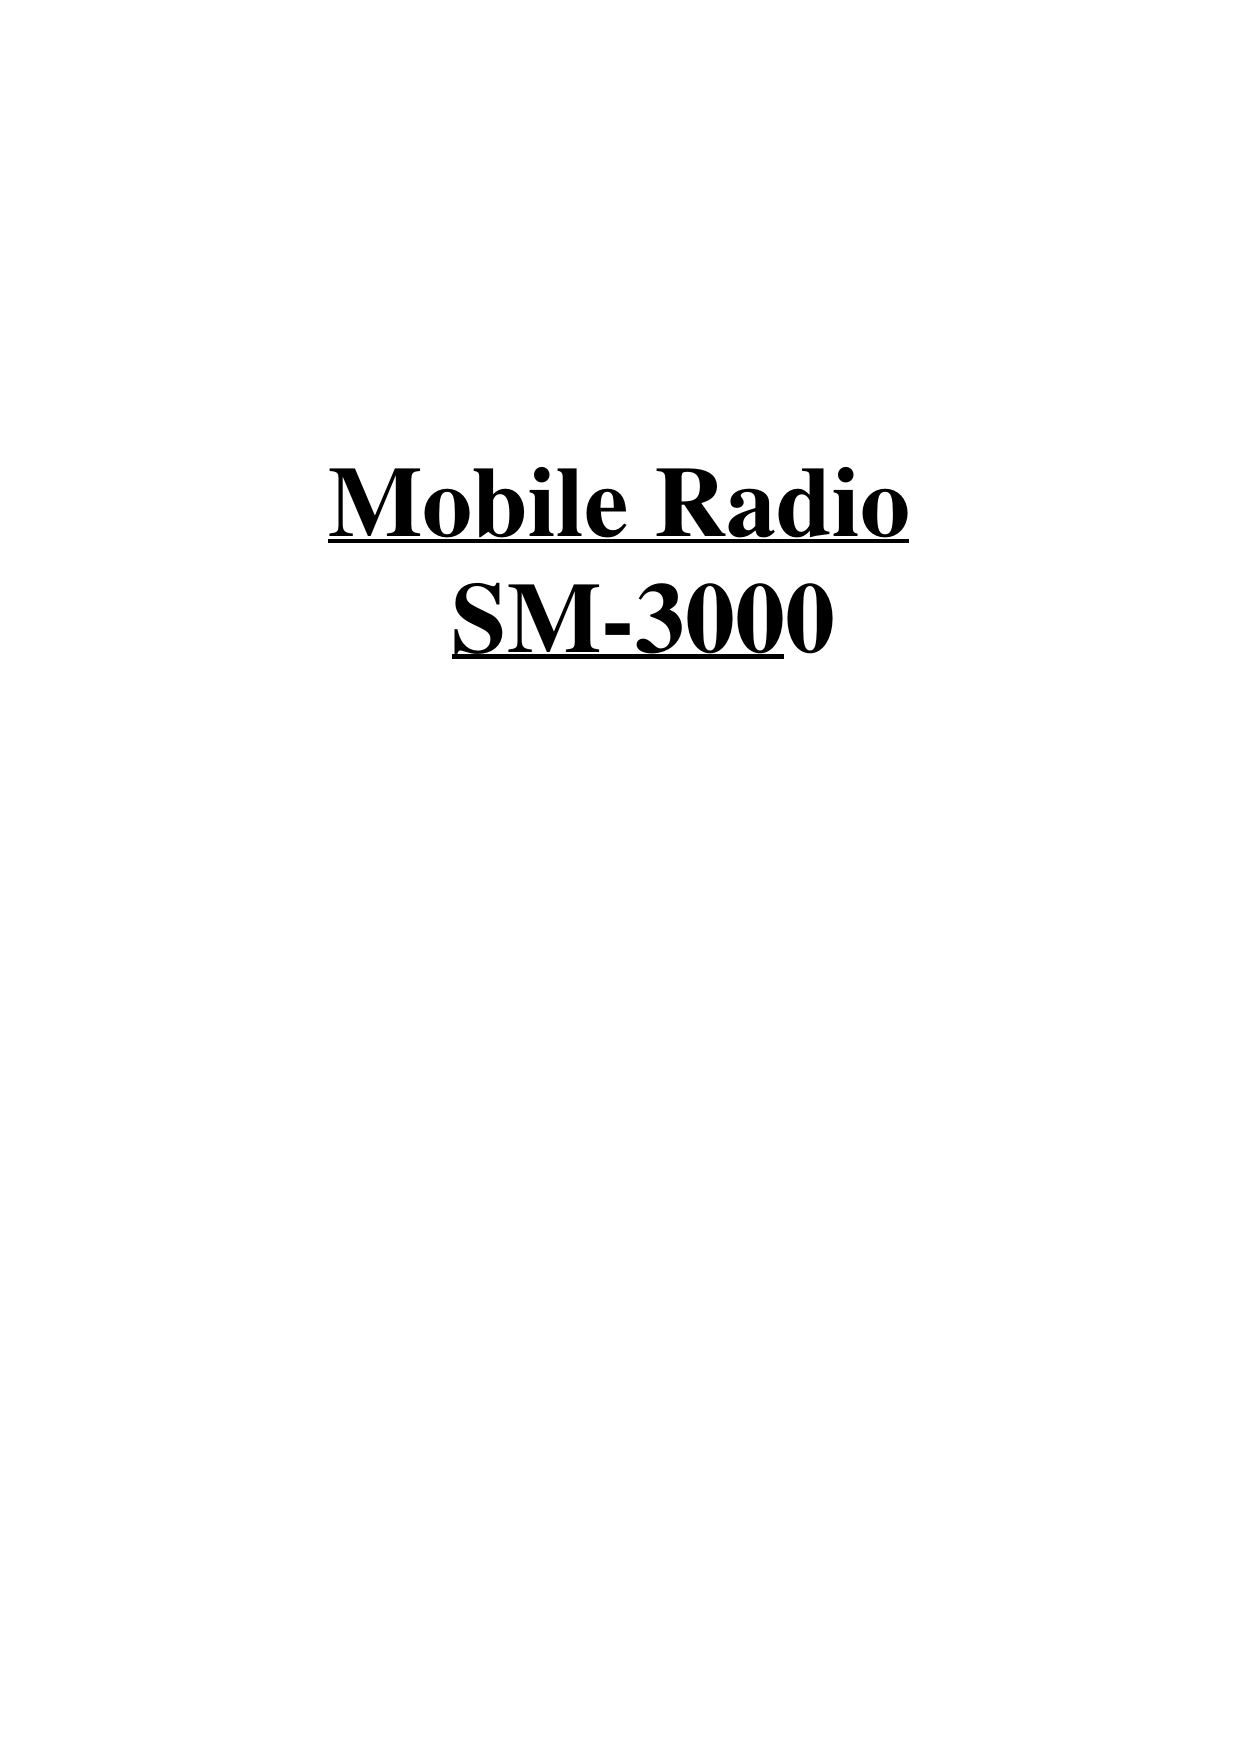 Mobile RadioSM-3000